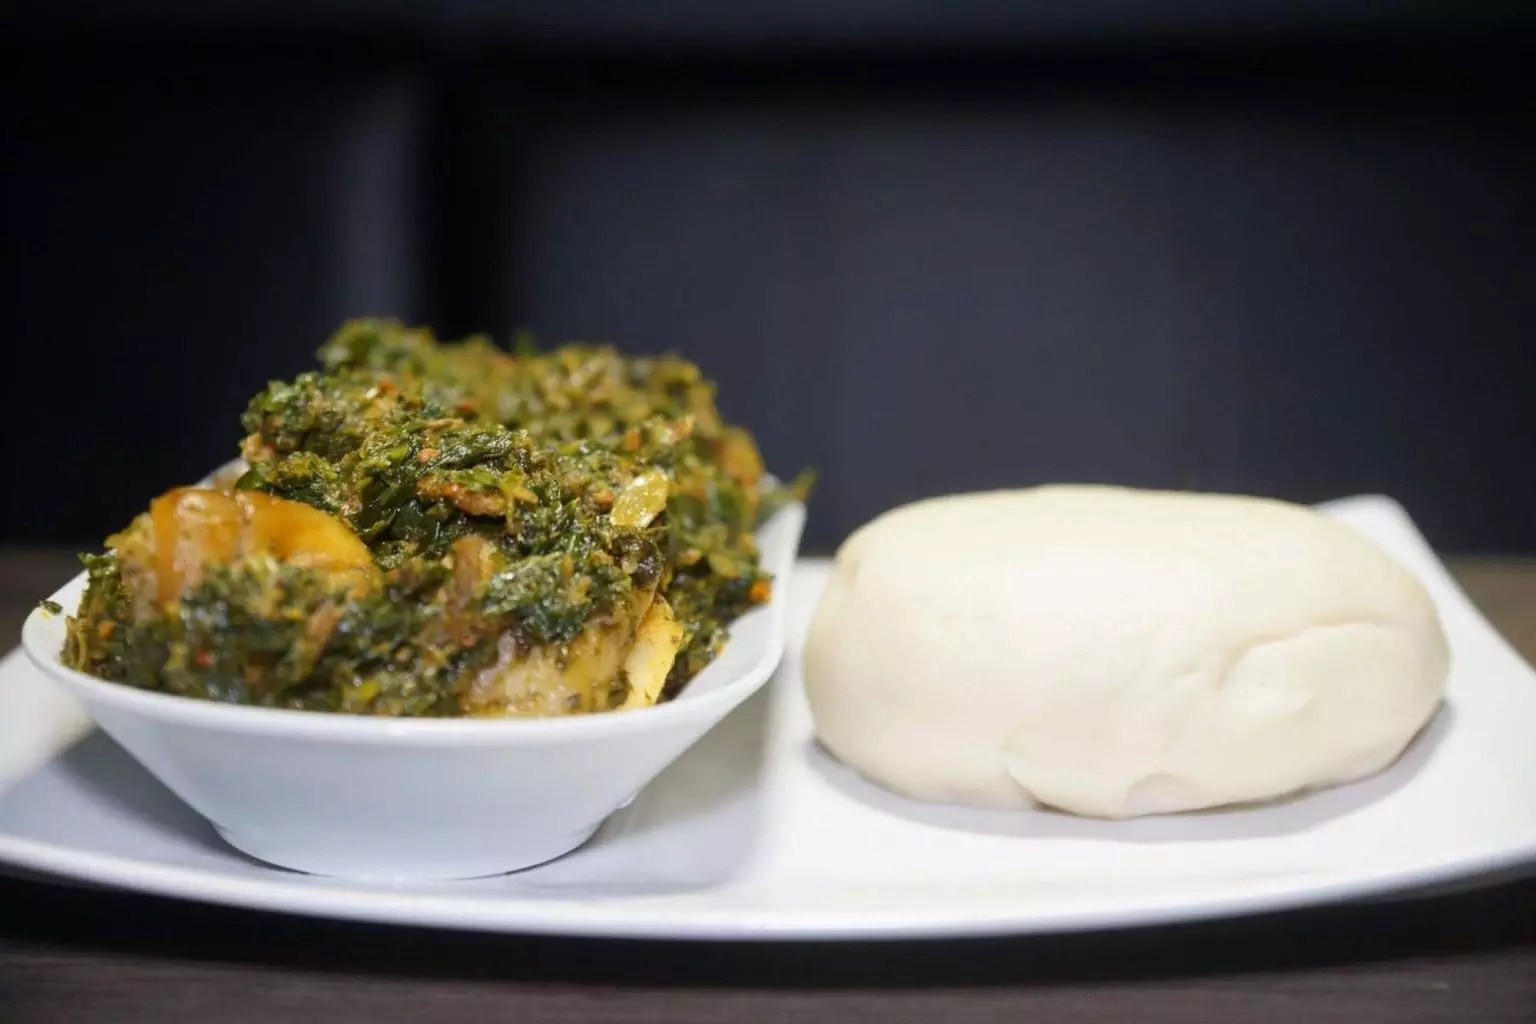 Nigerian food